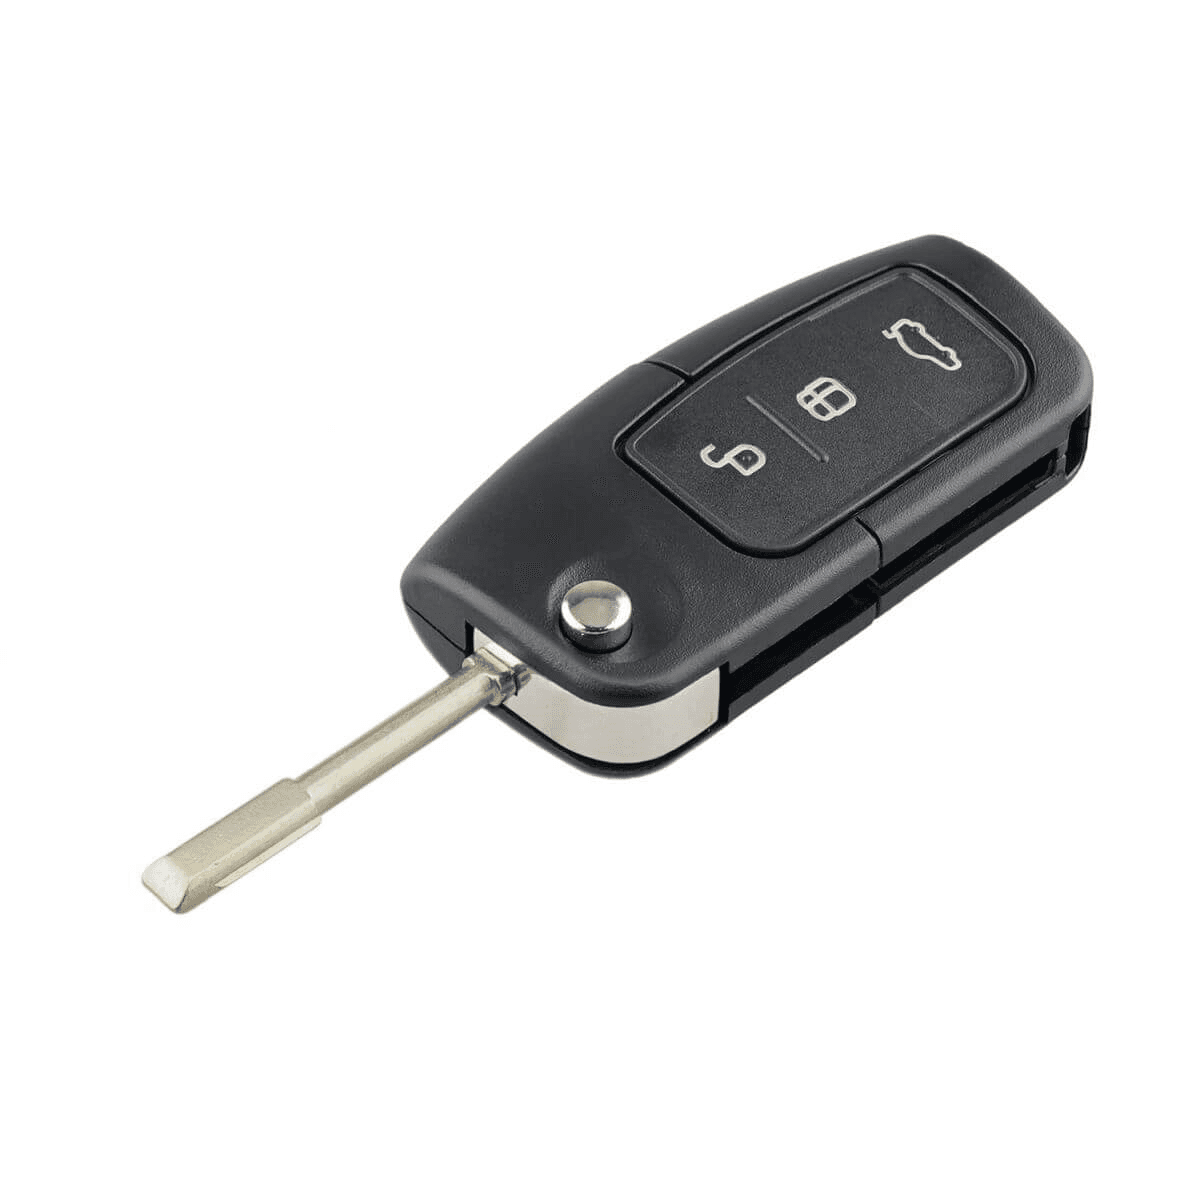 Selected image for CAR ACESSORIES 888 Kućište auto ključa sa 3 tastera za Ford E34-AP000